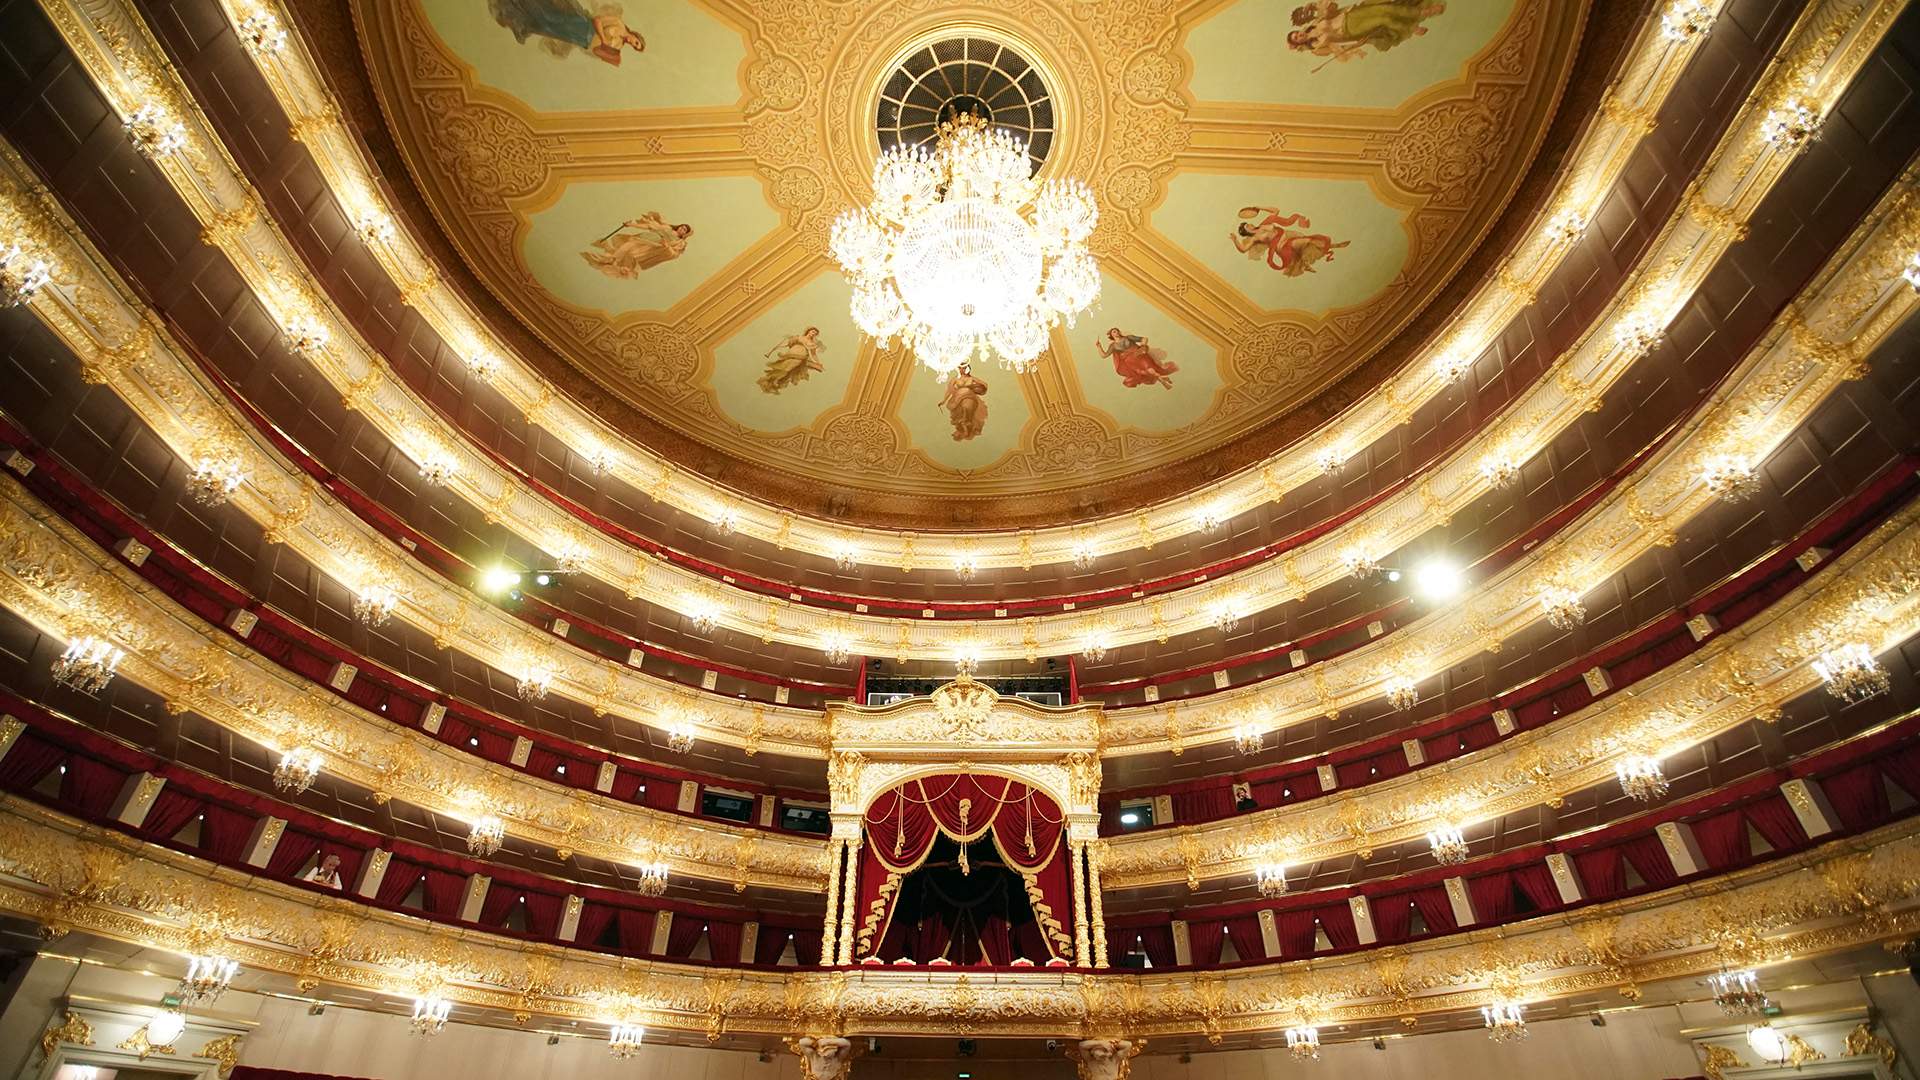 Opera Theatre of Saint Louis